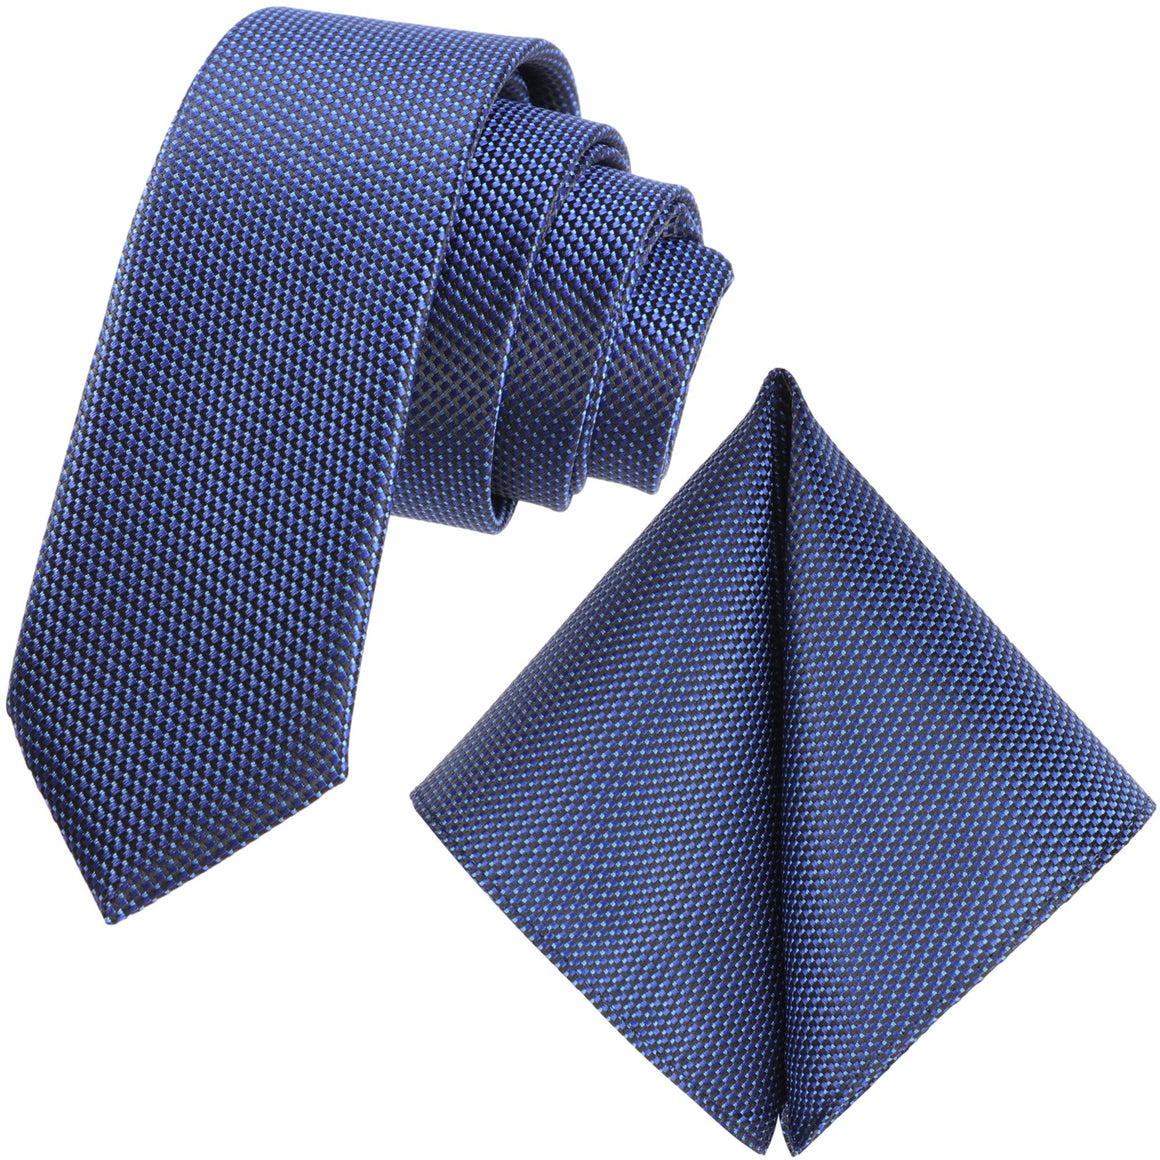 GASSANI 2 Krawattenset, 6cm Dünne Schmale Royal-Blaue Extra Lange Jacquard Herren-Krawatte Kariert,  Royalblaues Krawatten-Set mit Einstecktuch